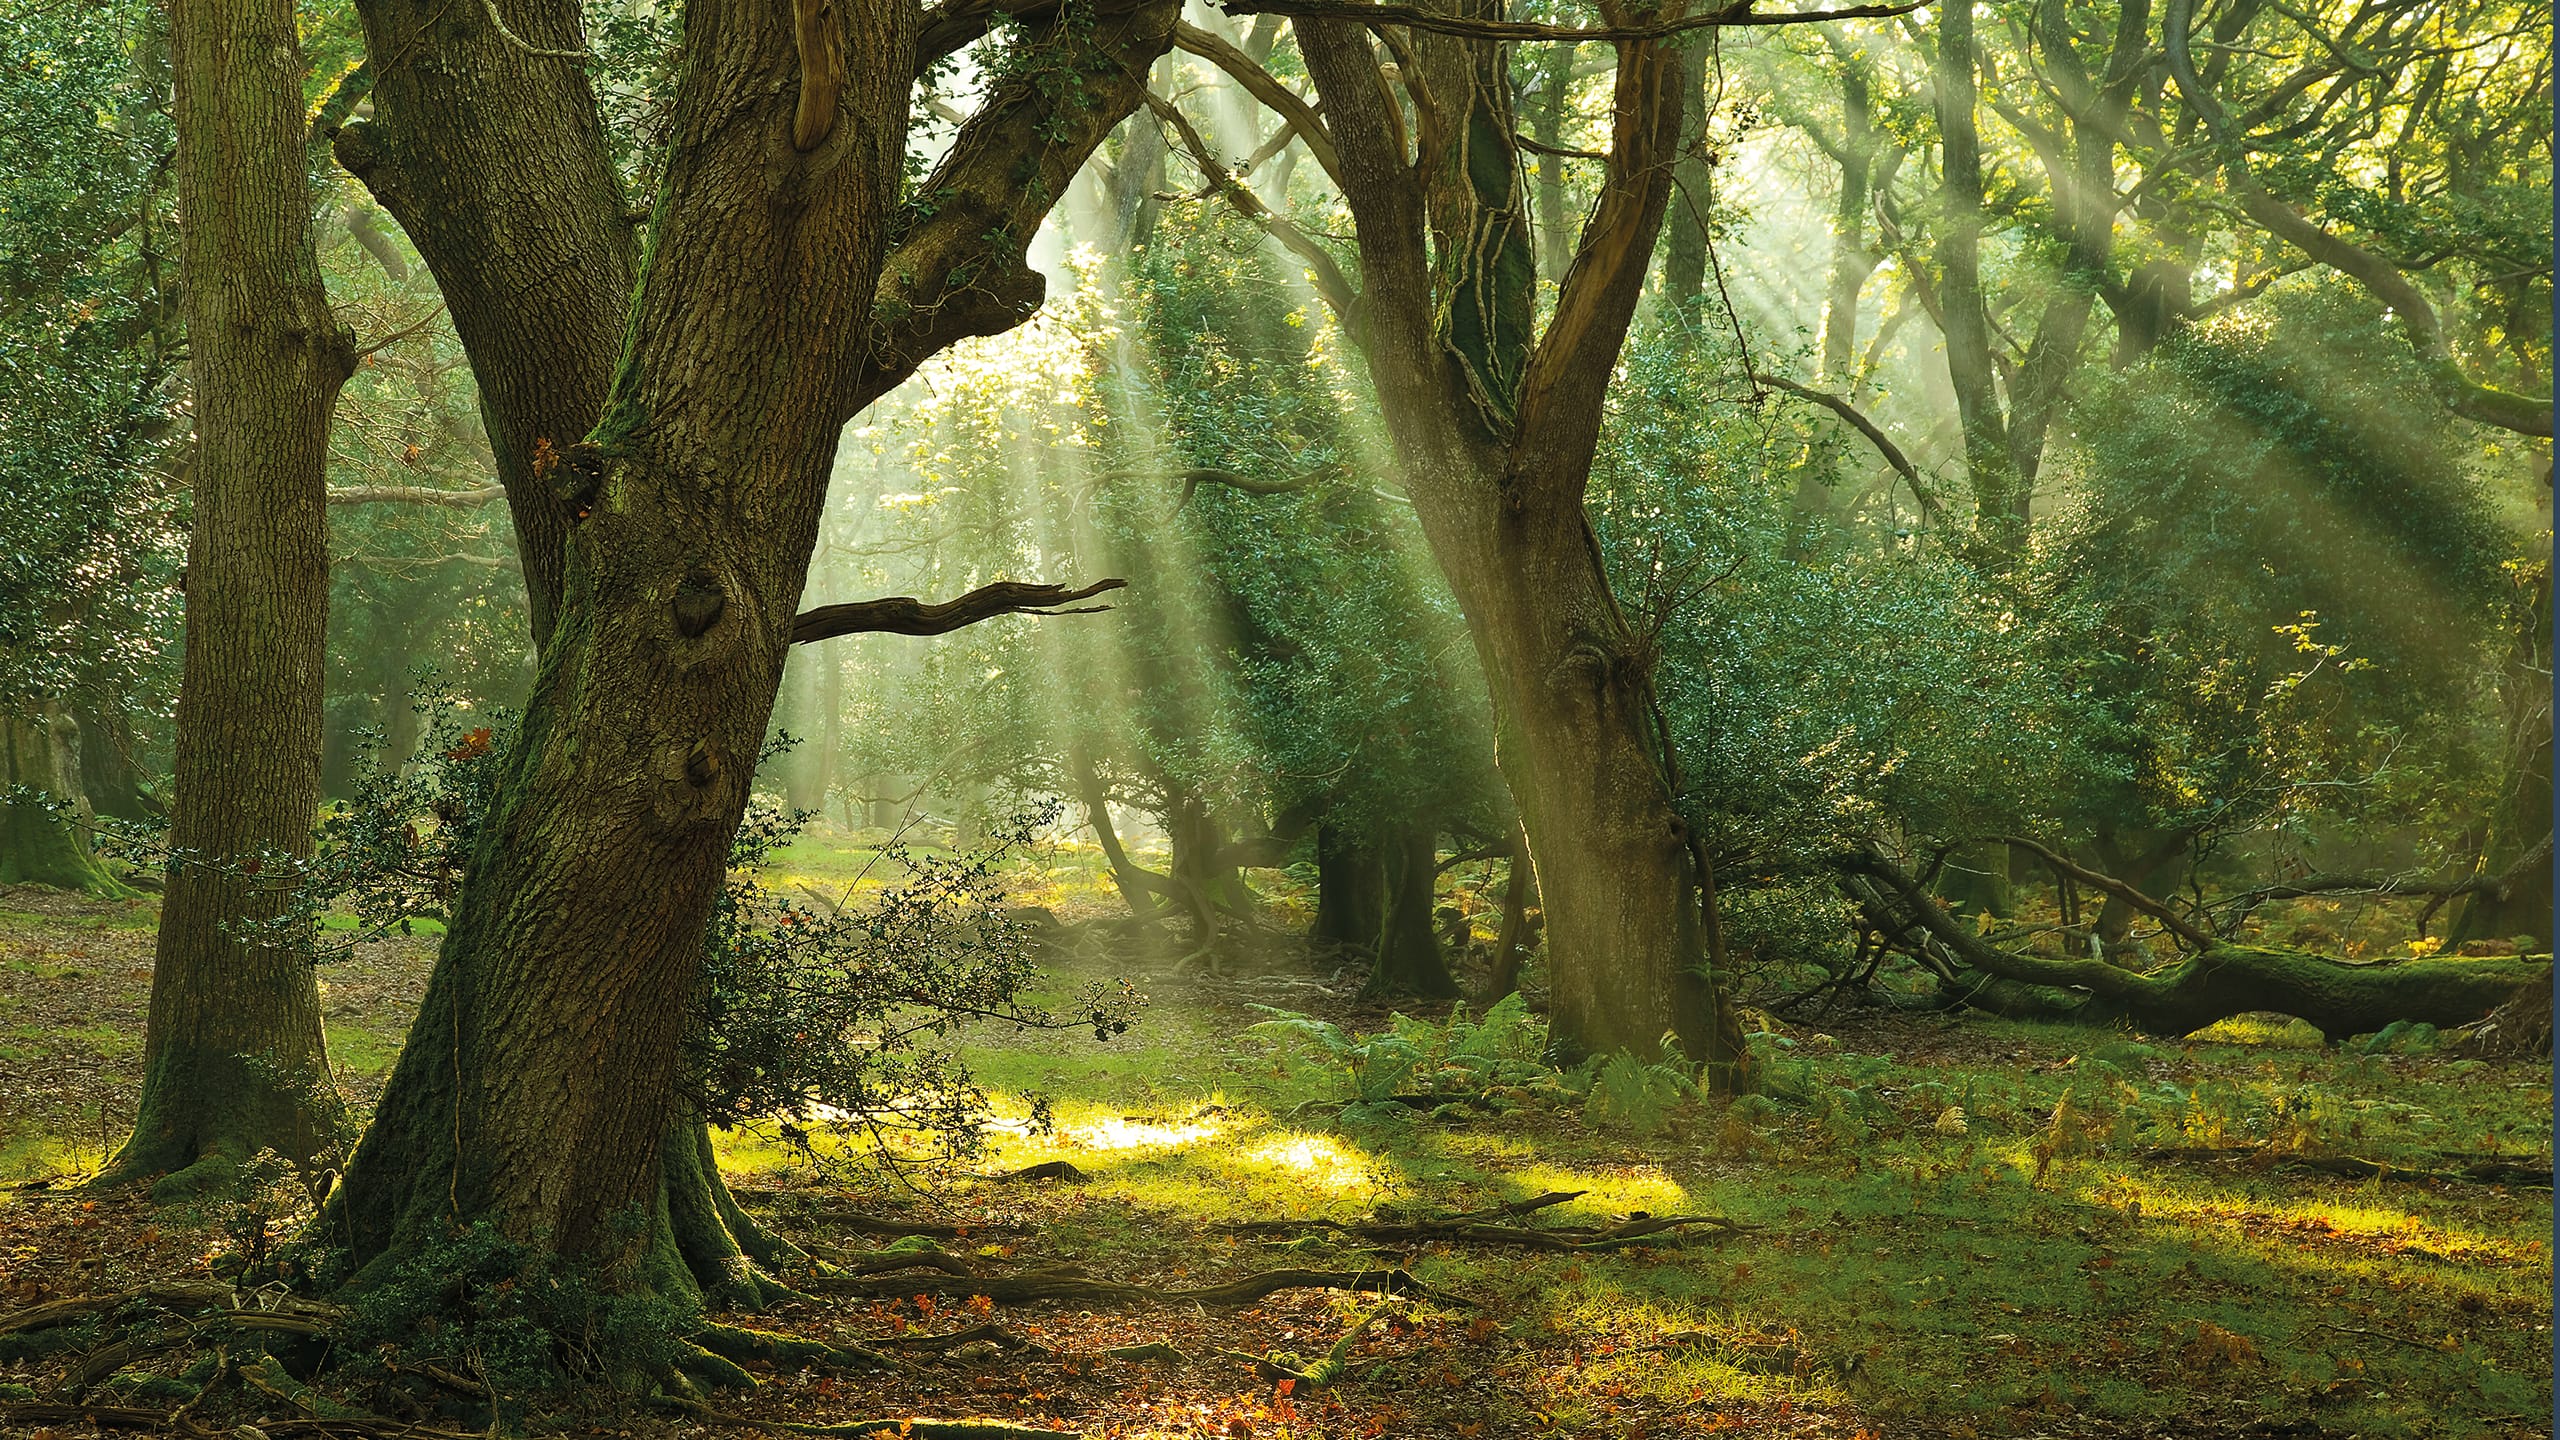 RSPB - Unlocking a secret forest - Image of sunlight shining through parts of a woodland landscape.